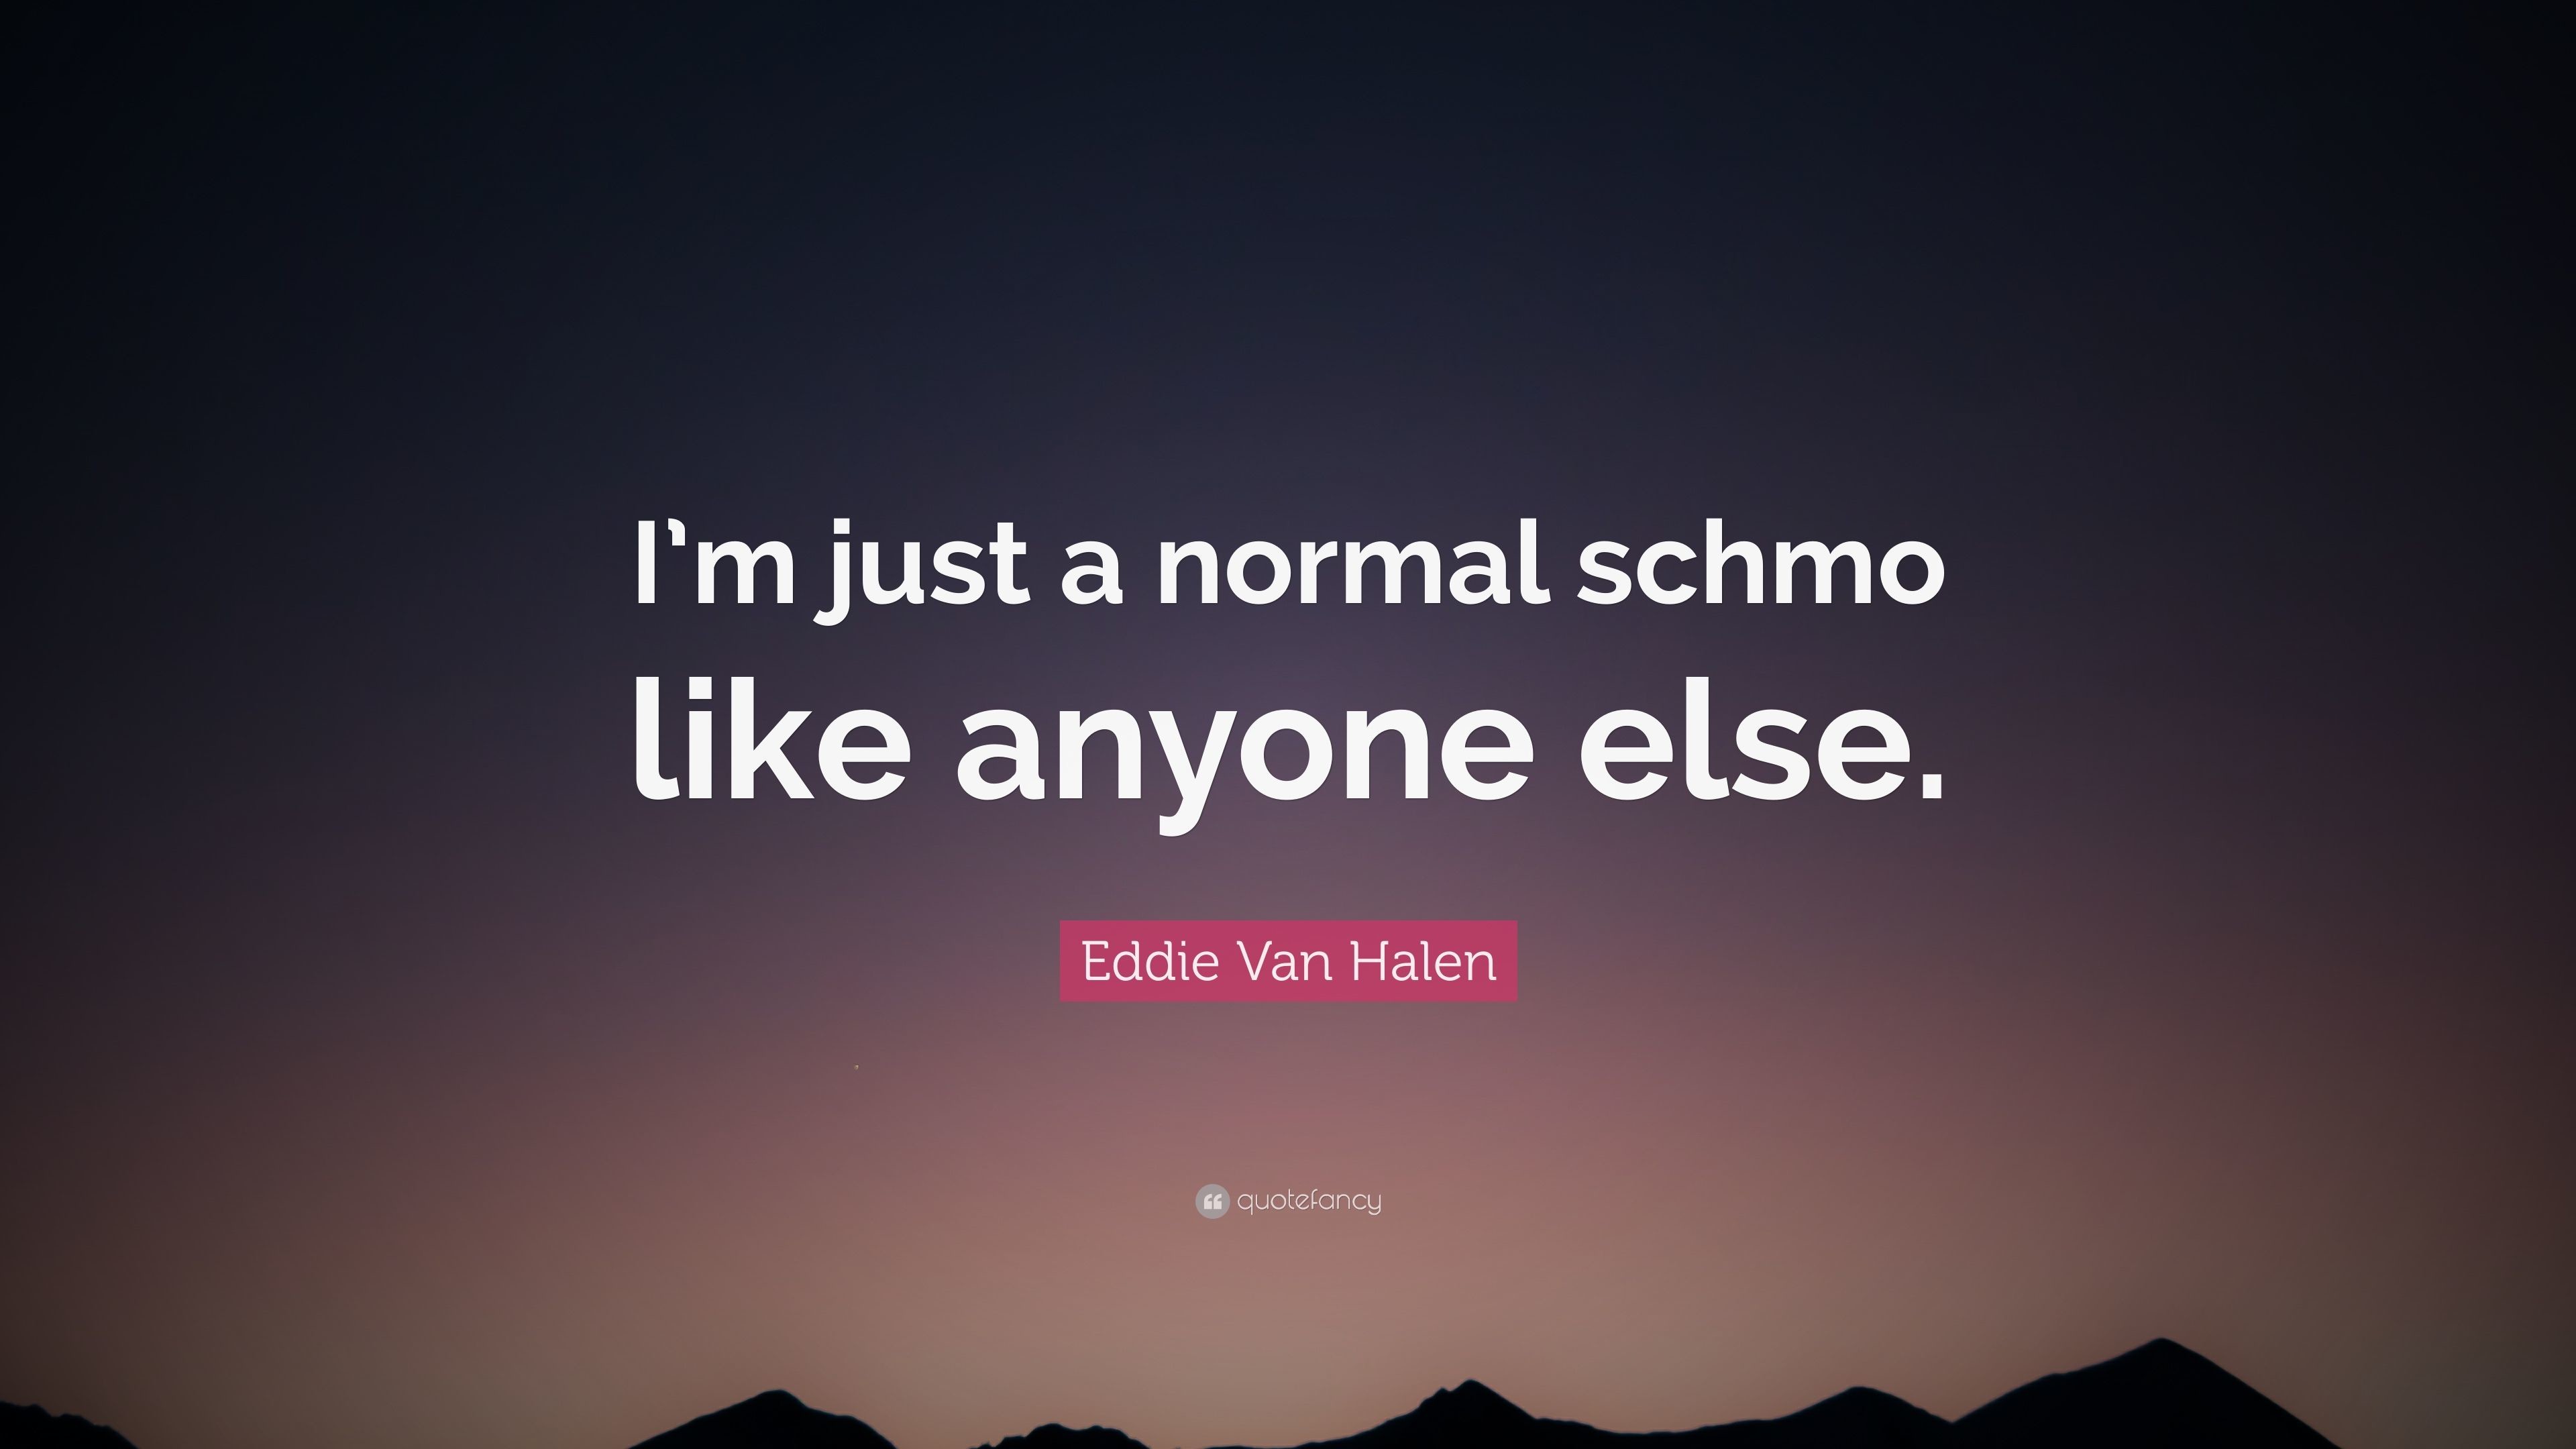 3840x2160 Eddie Van Halen Quote: “I'm just a normal schmo like anyone else